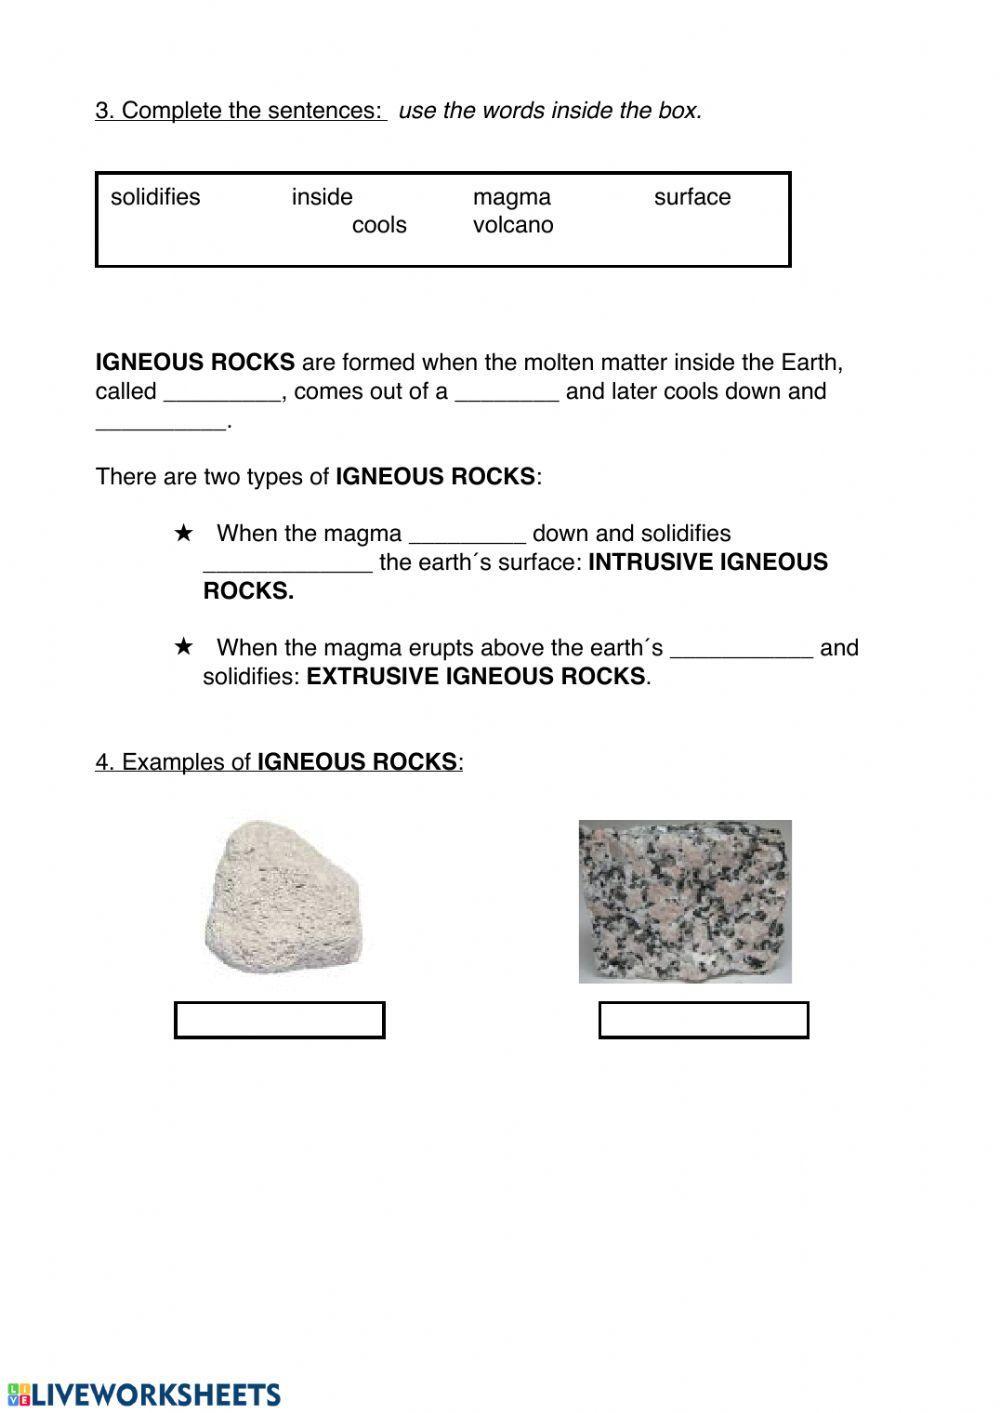 Three types of rocks